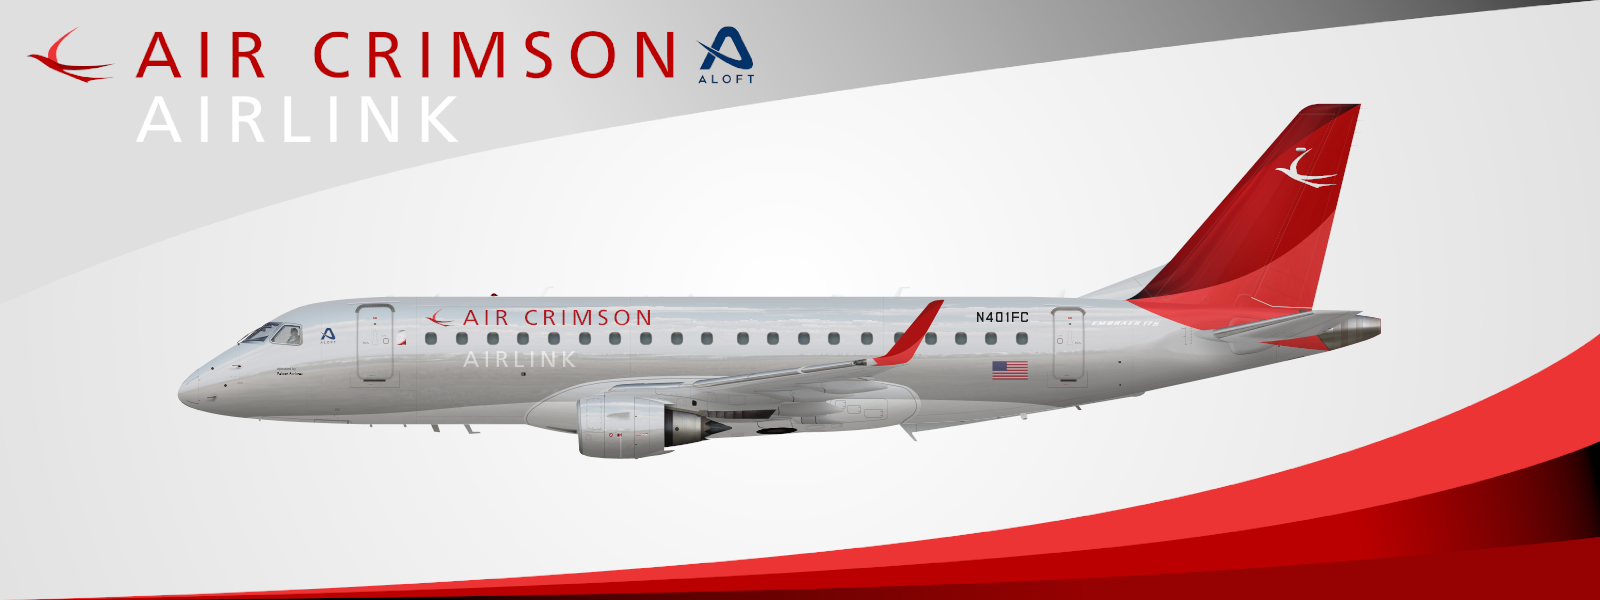 Air Crimson Airlink Falcon Airlines Embraer E175 Air Crimson